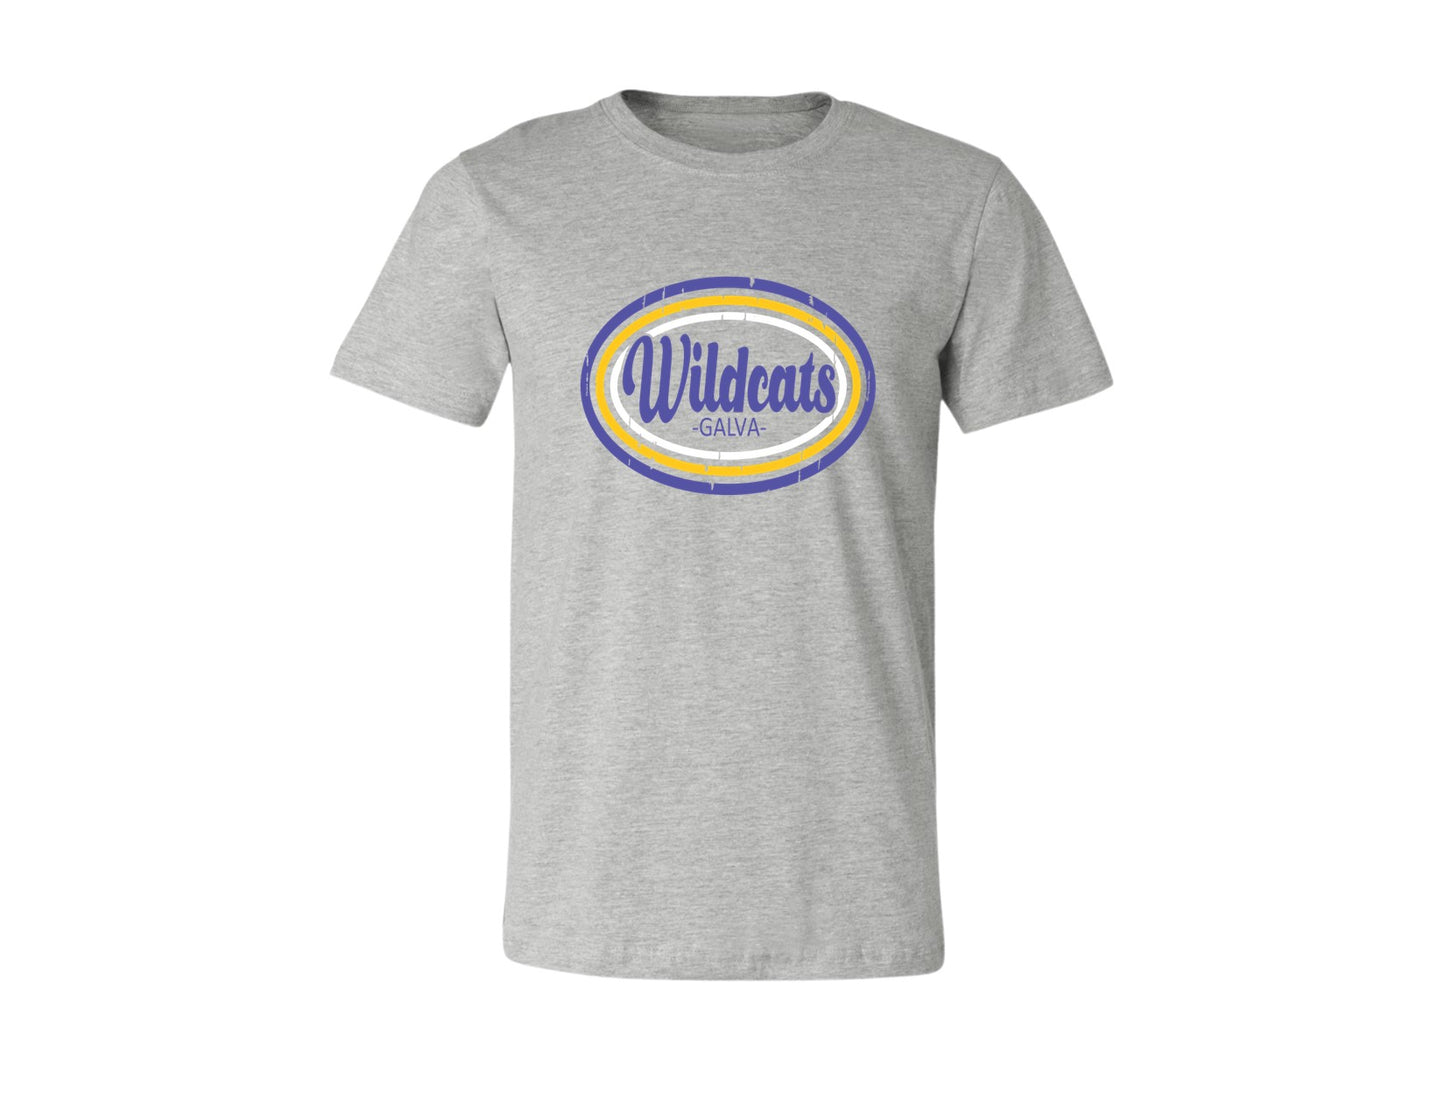 Galva Wildcats - Retro Tee Shirt